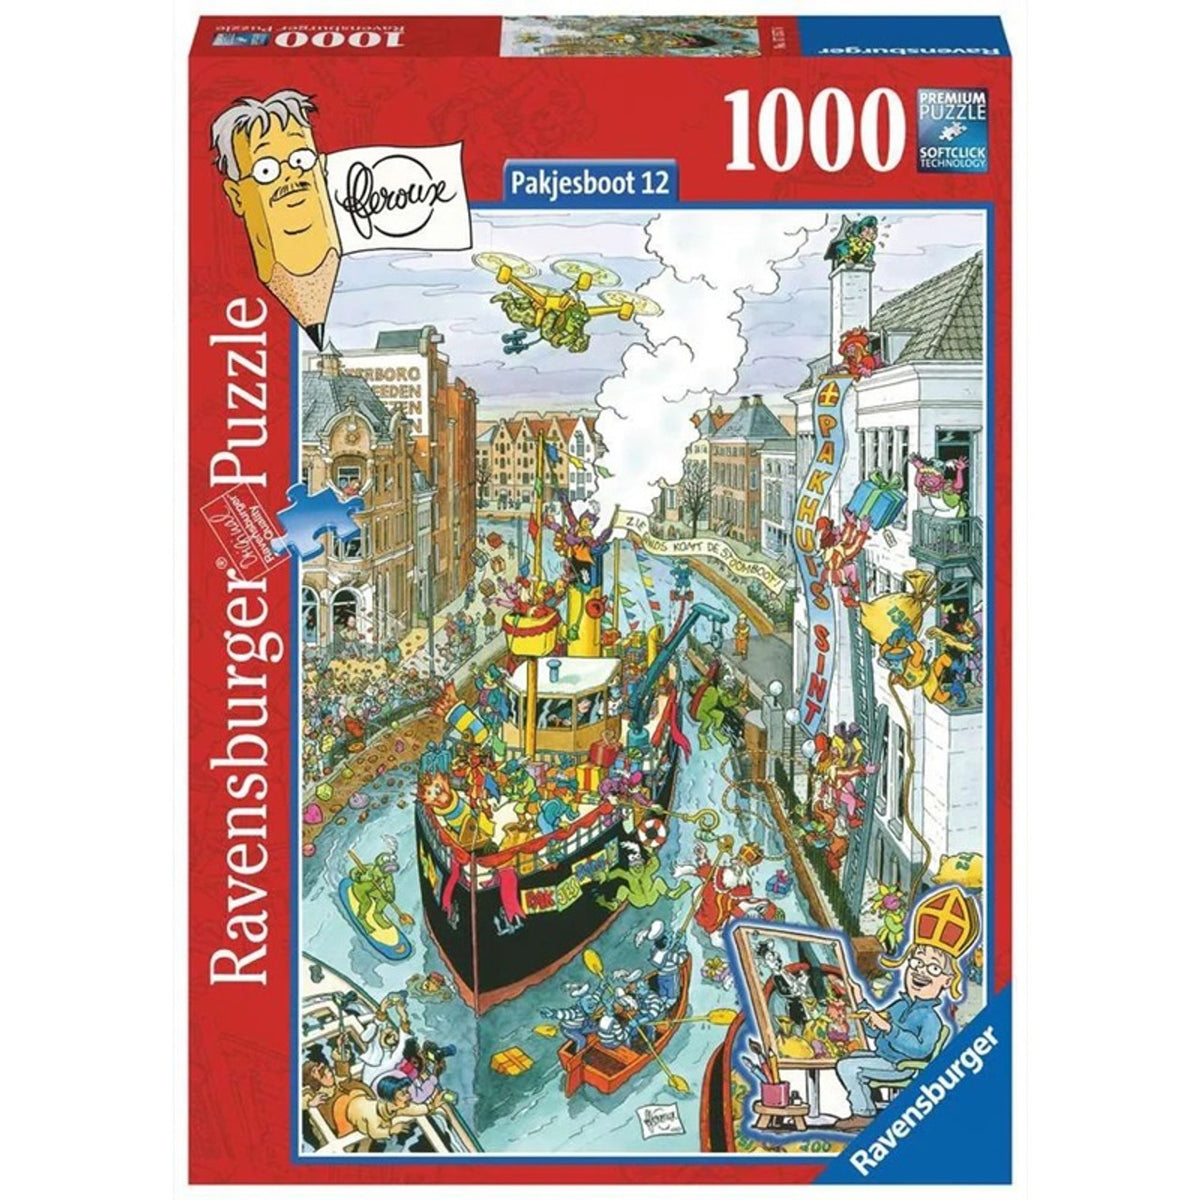 Ravensburger - Pakjesboot 12 1000 Piece Jigsaw